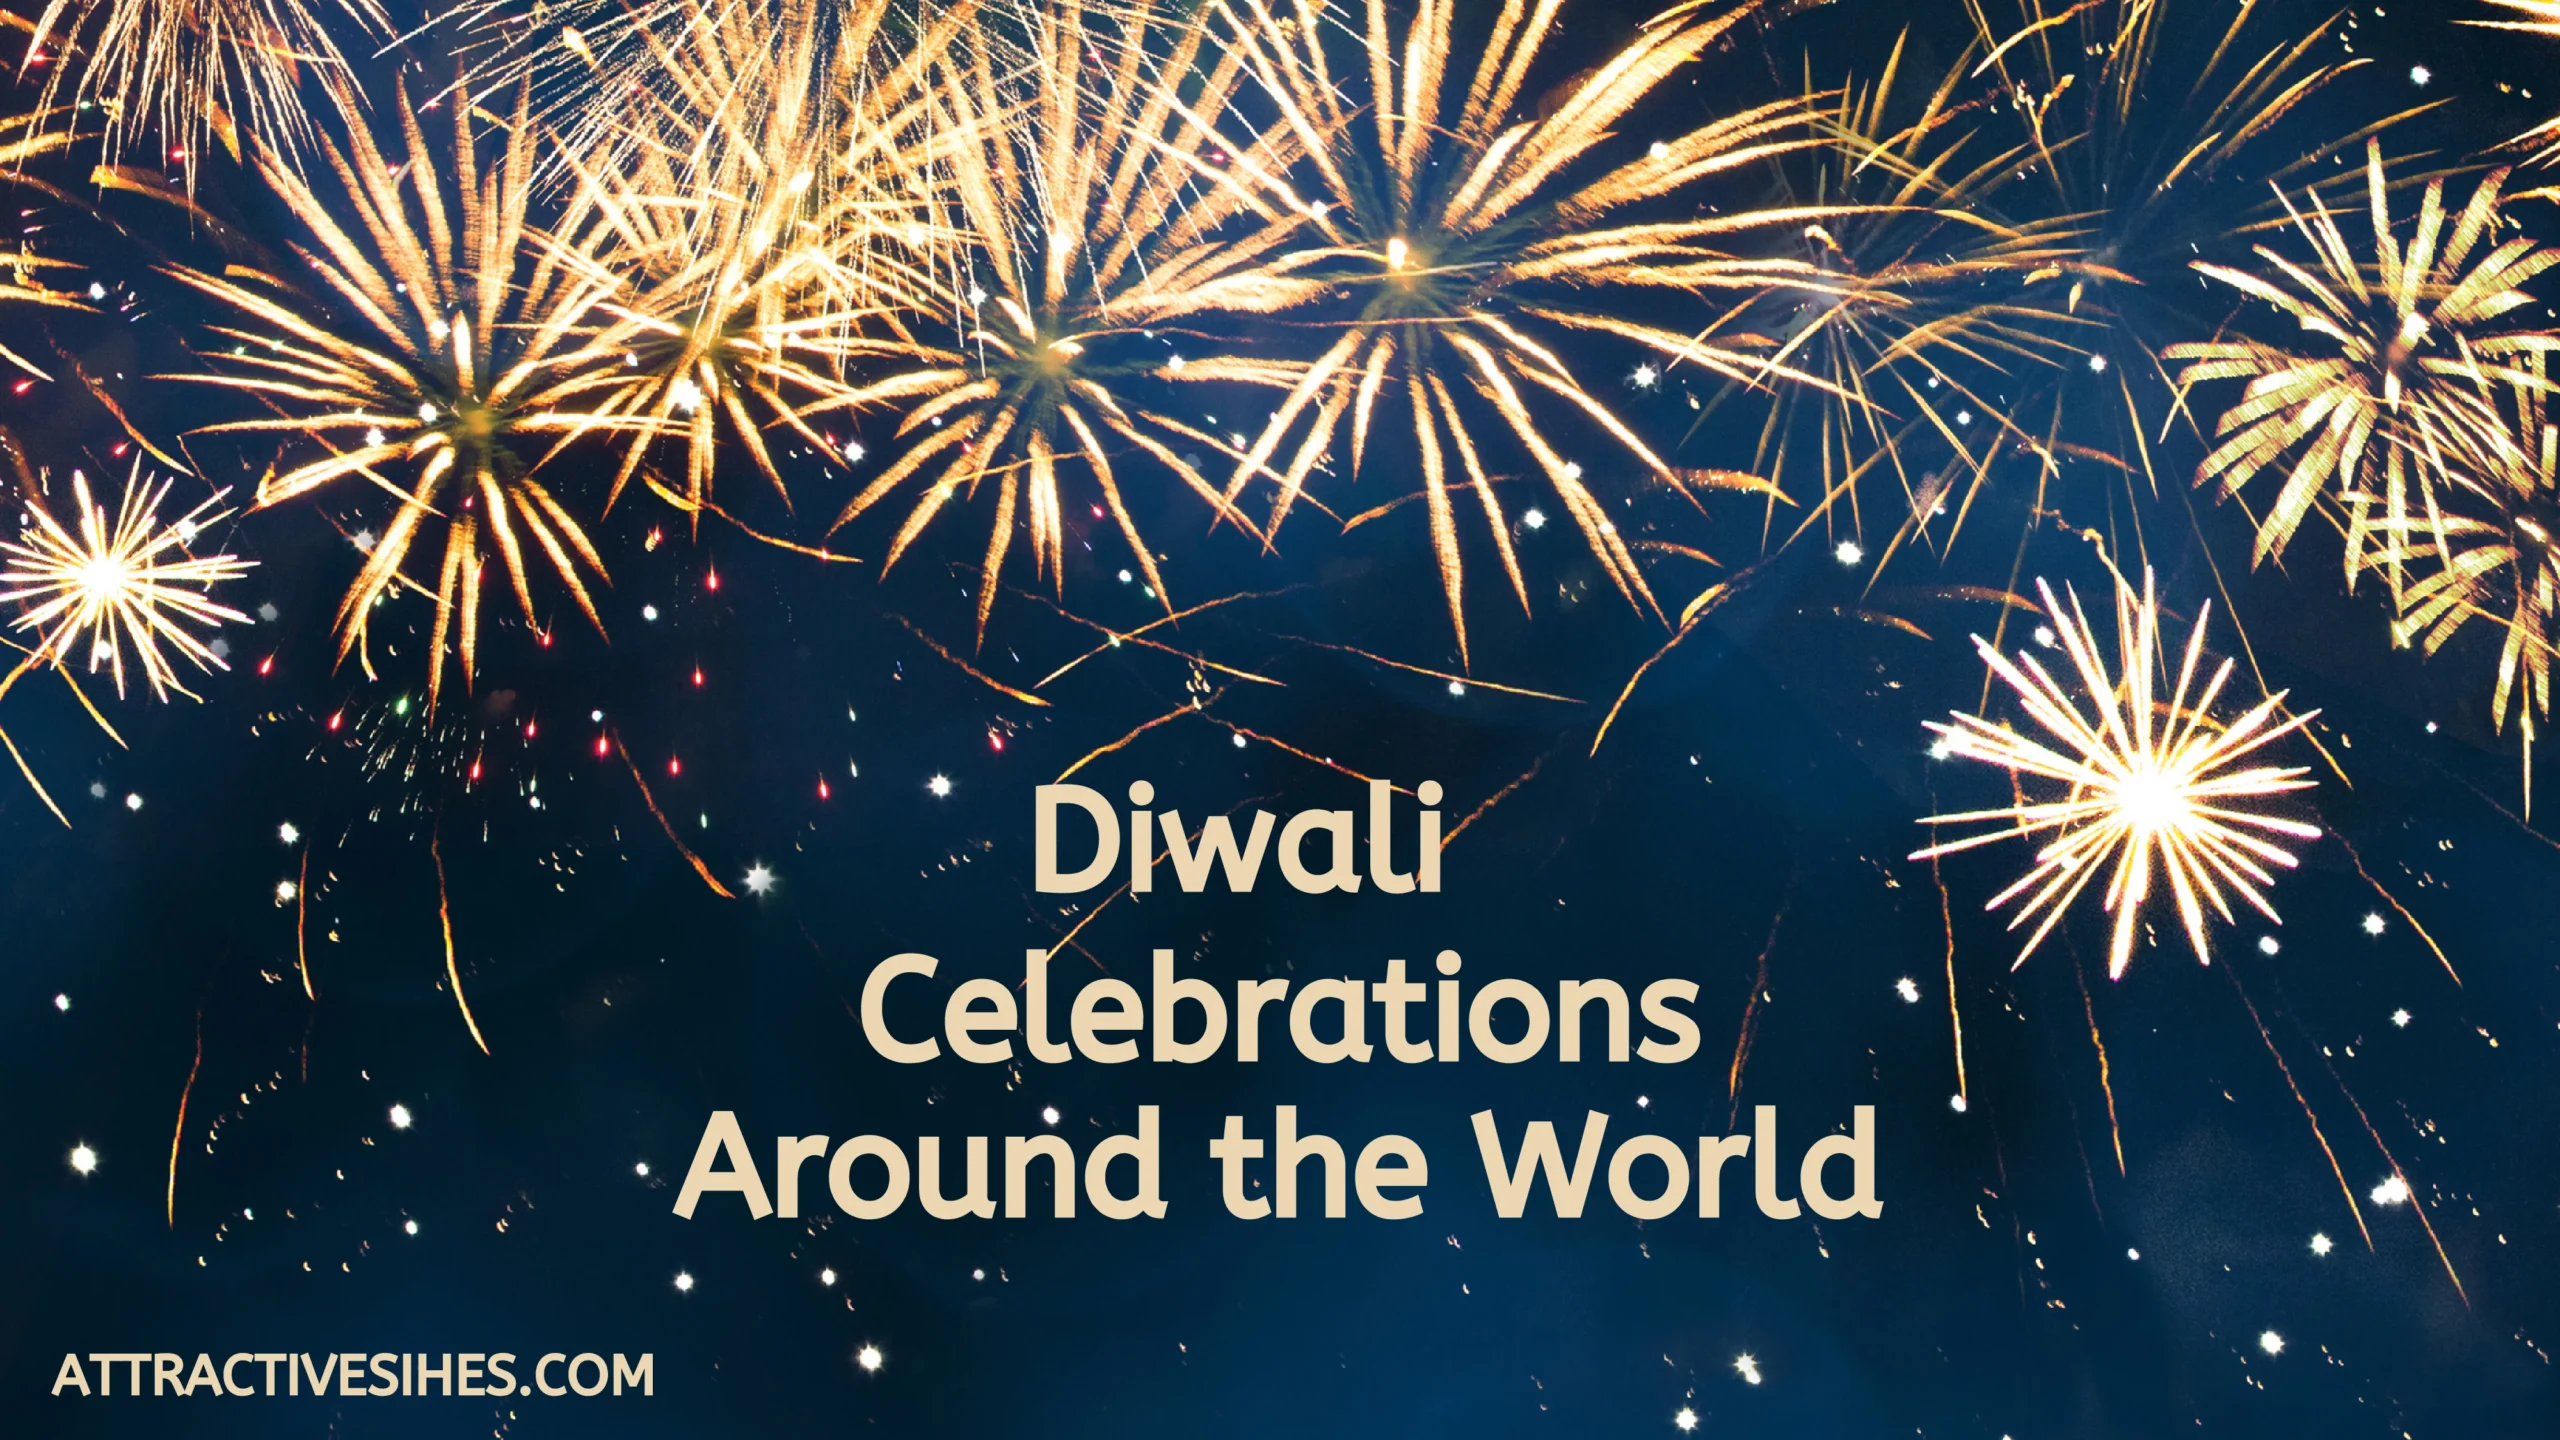 Diwali Celebrations Around the World